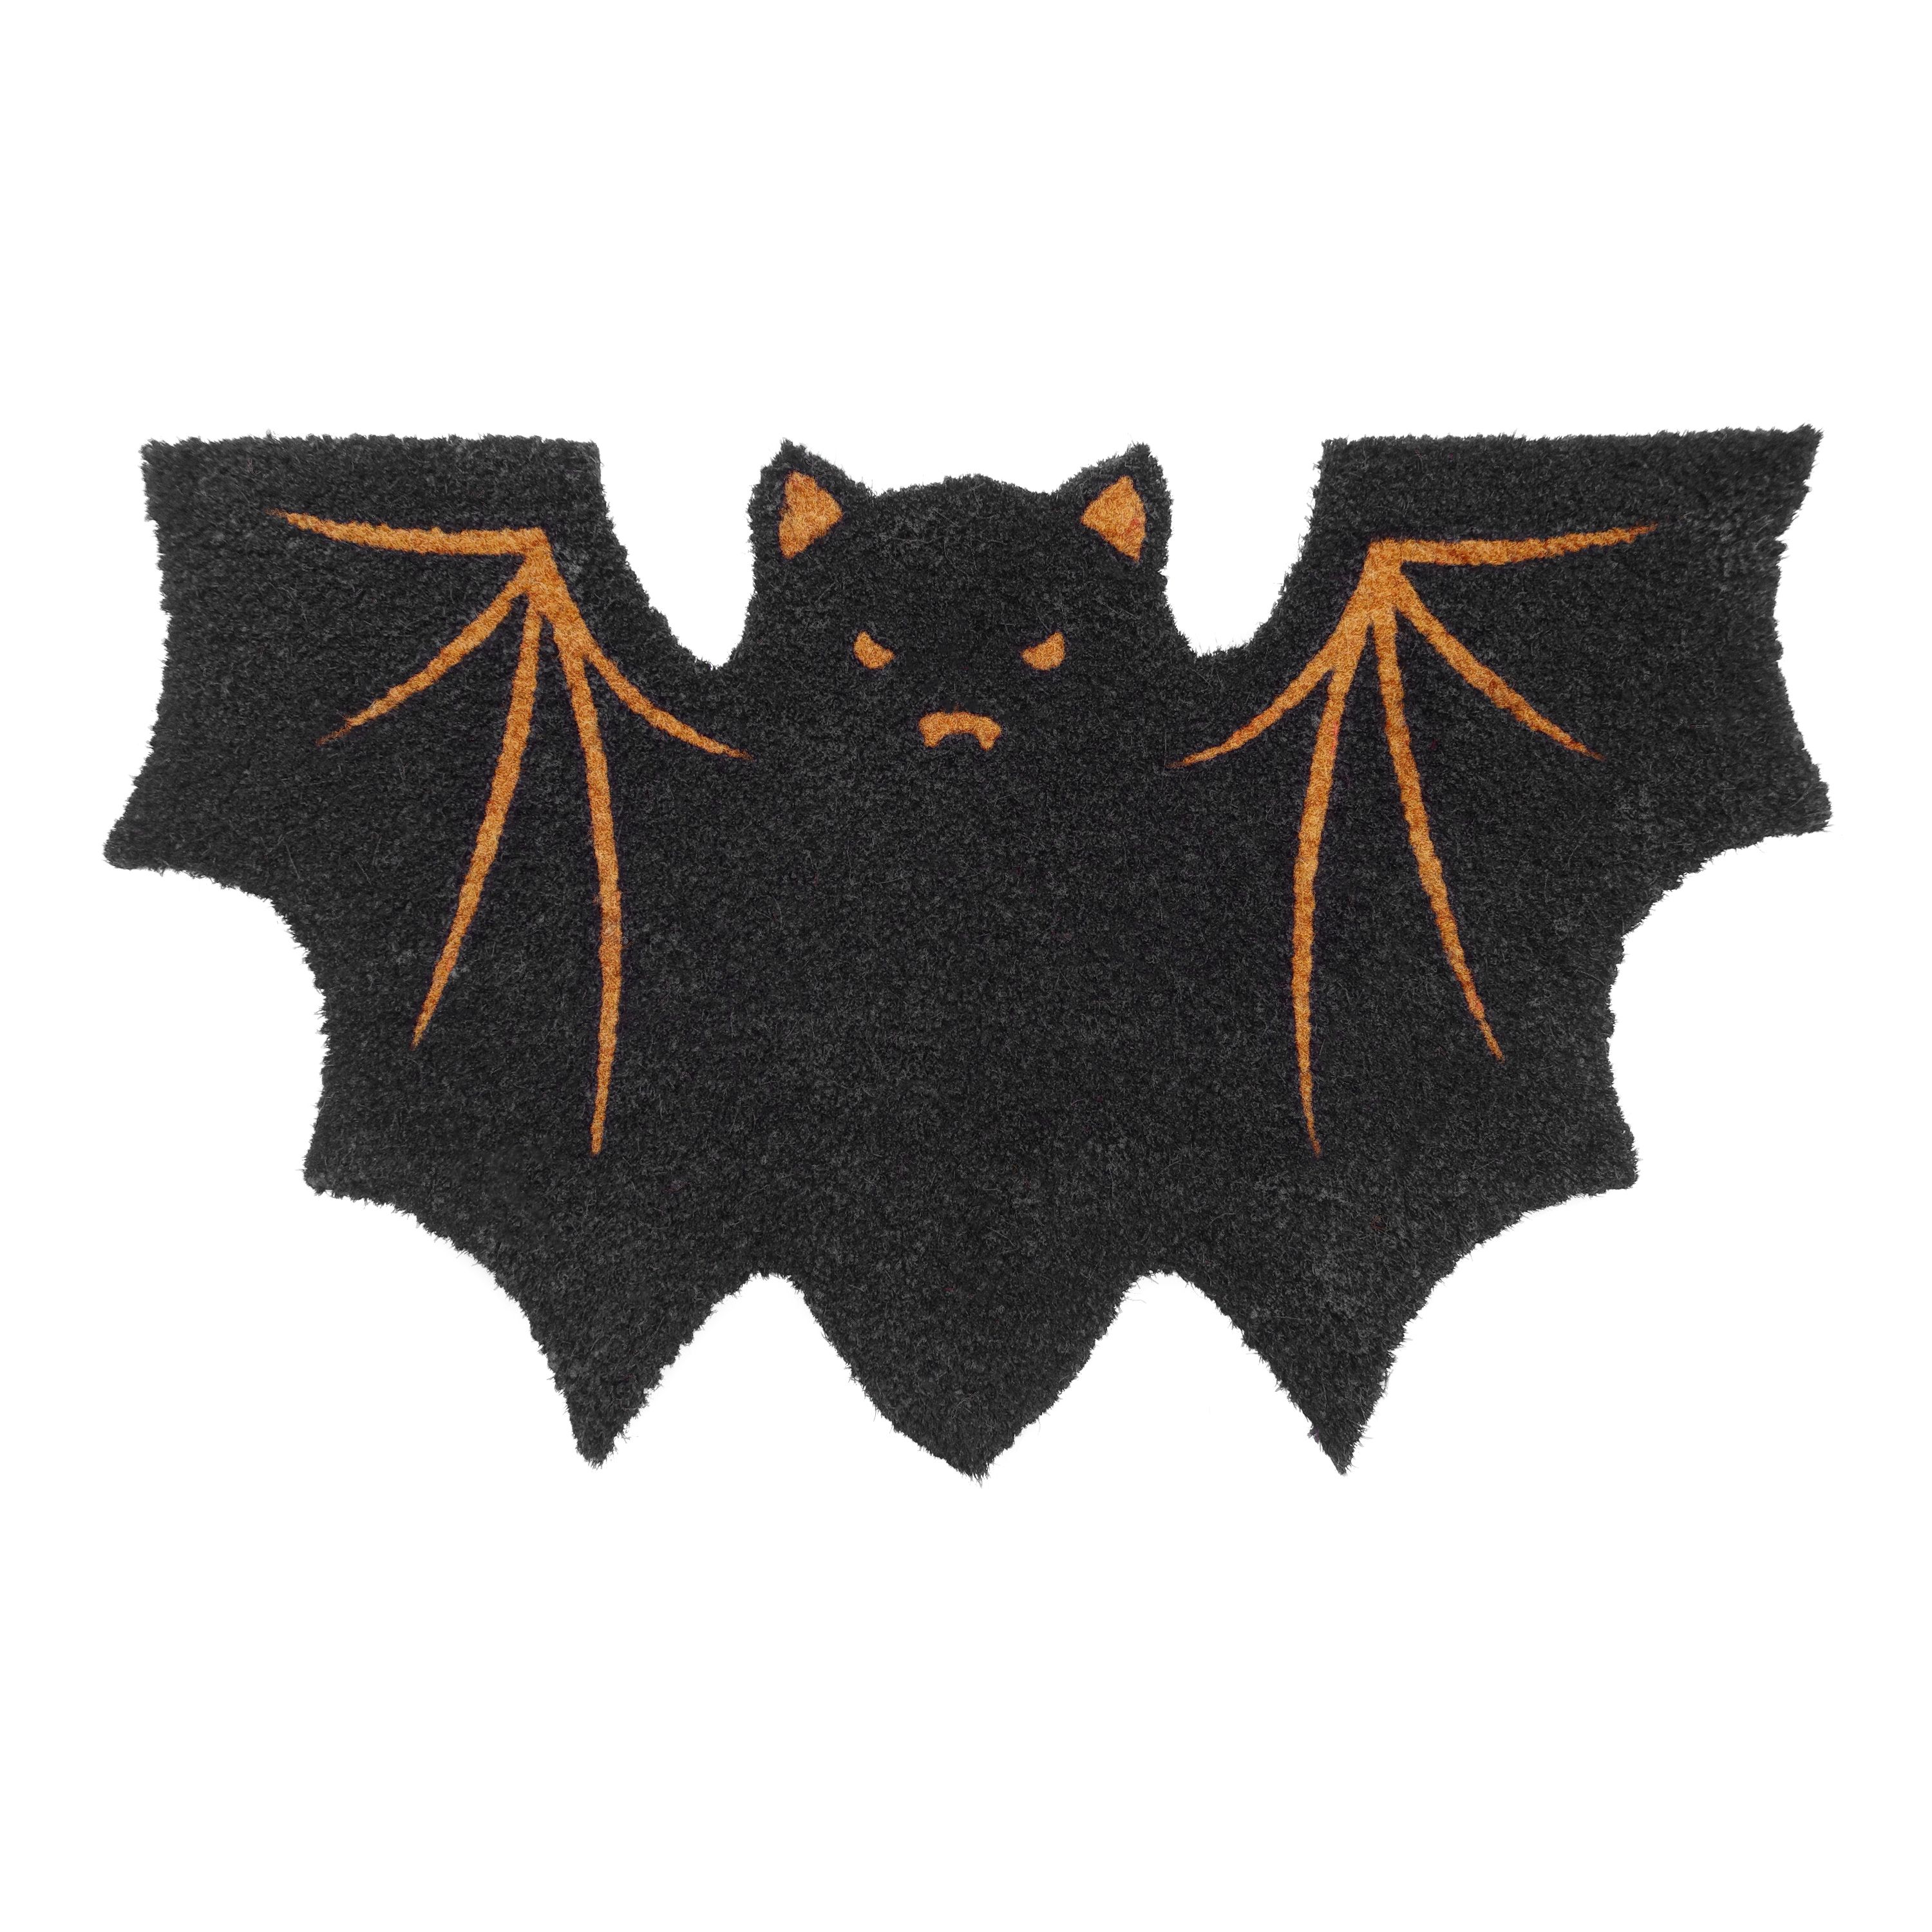 Black and Natural Coir Bat Shaped Doormat | World Market